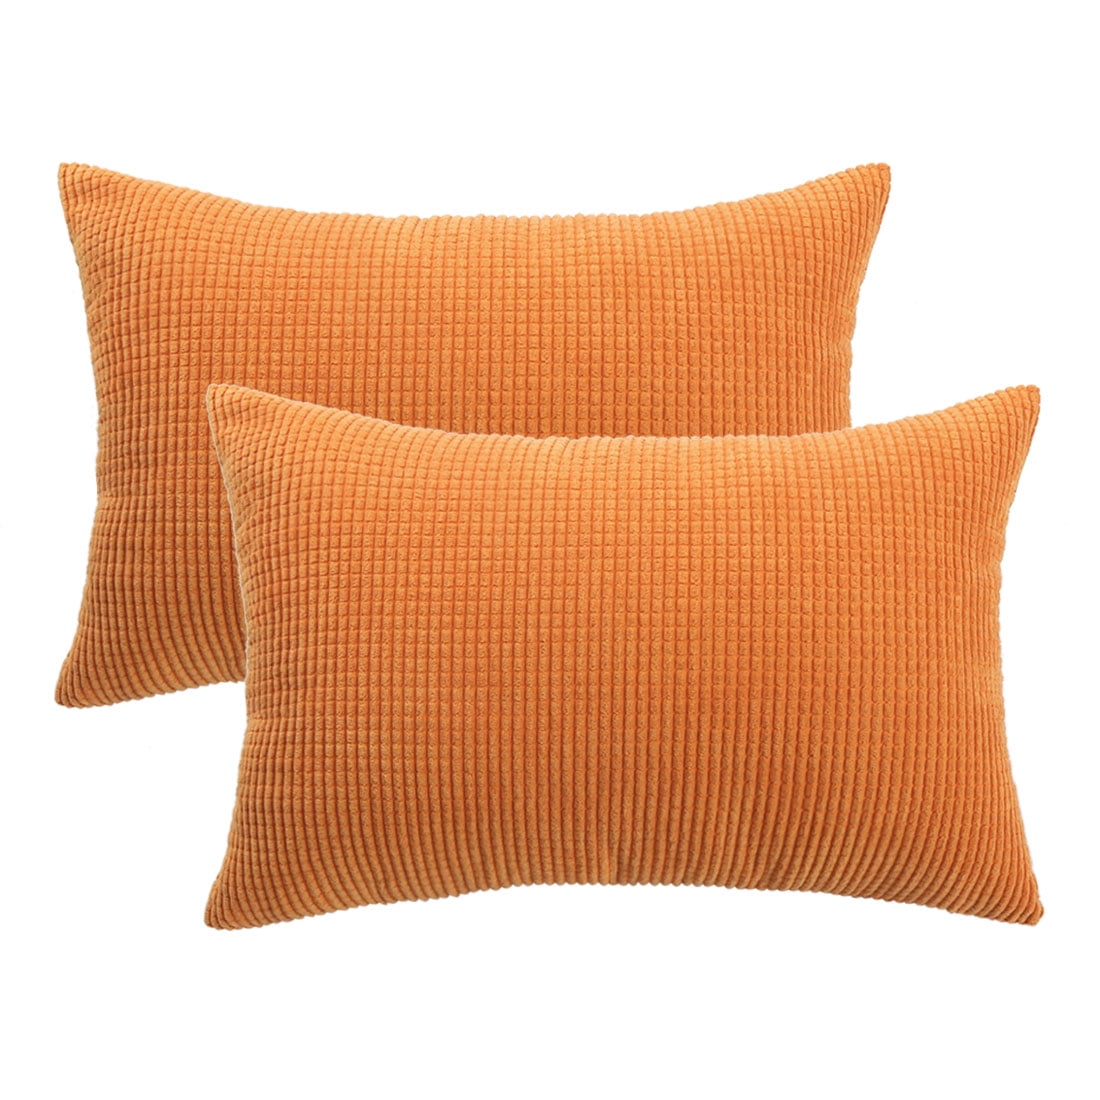 18" Corn Kernels Corduroy Pillow Case Throw Cushion Cover Home Sofa Car Decor US 